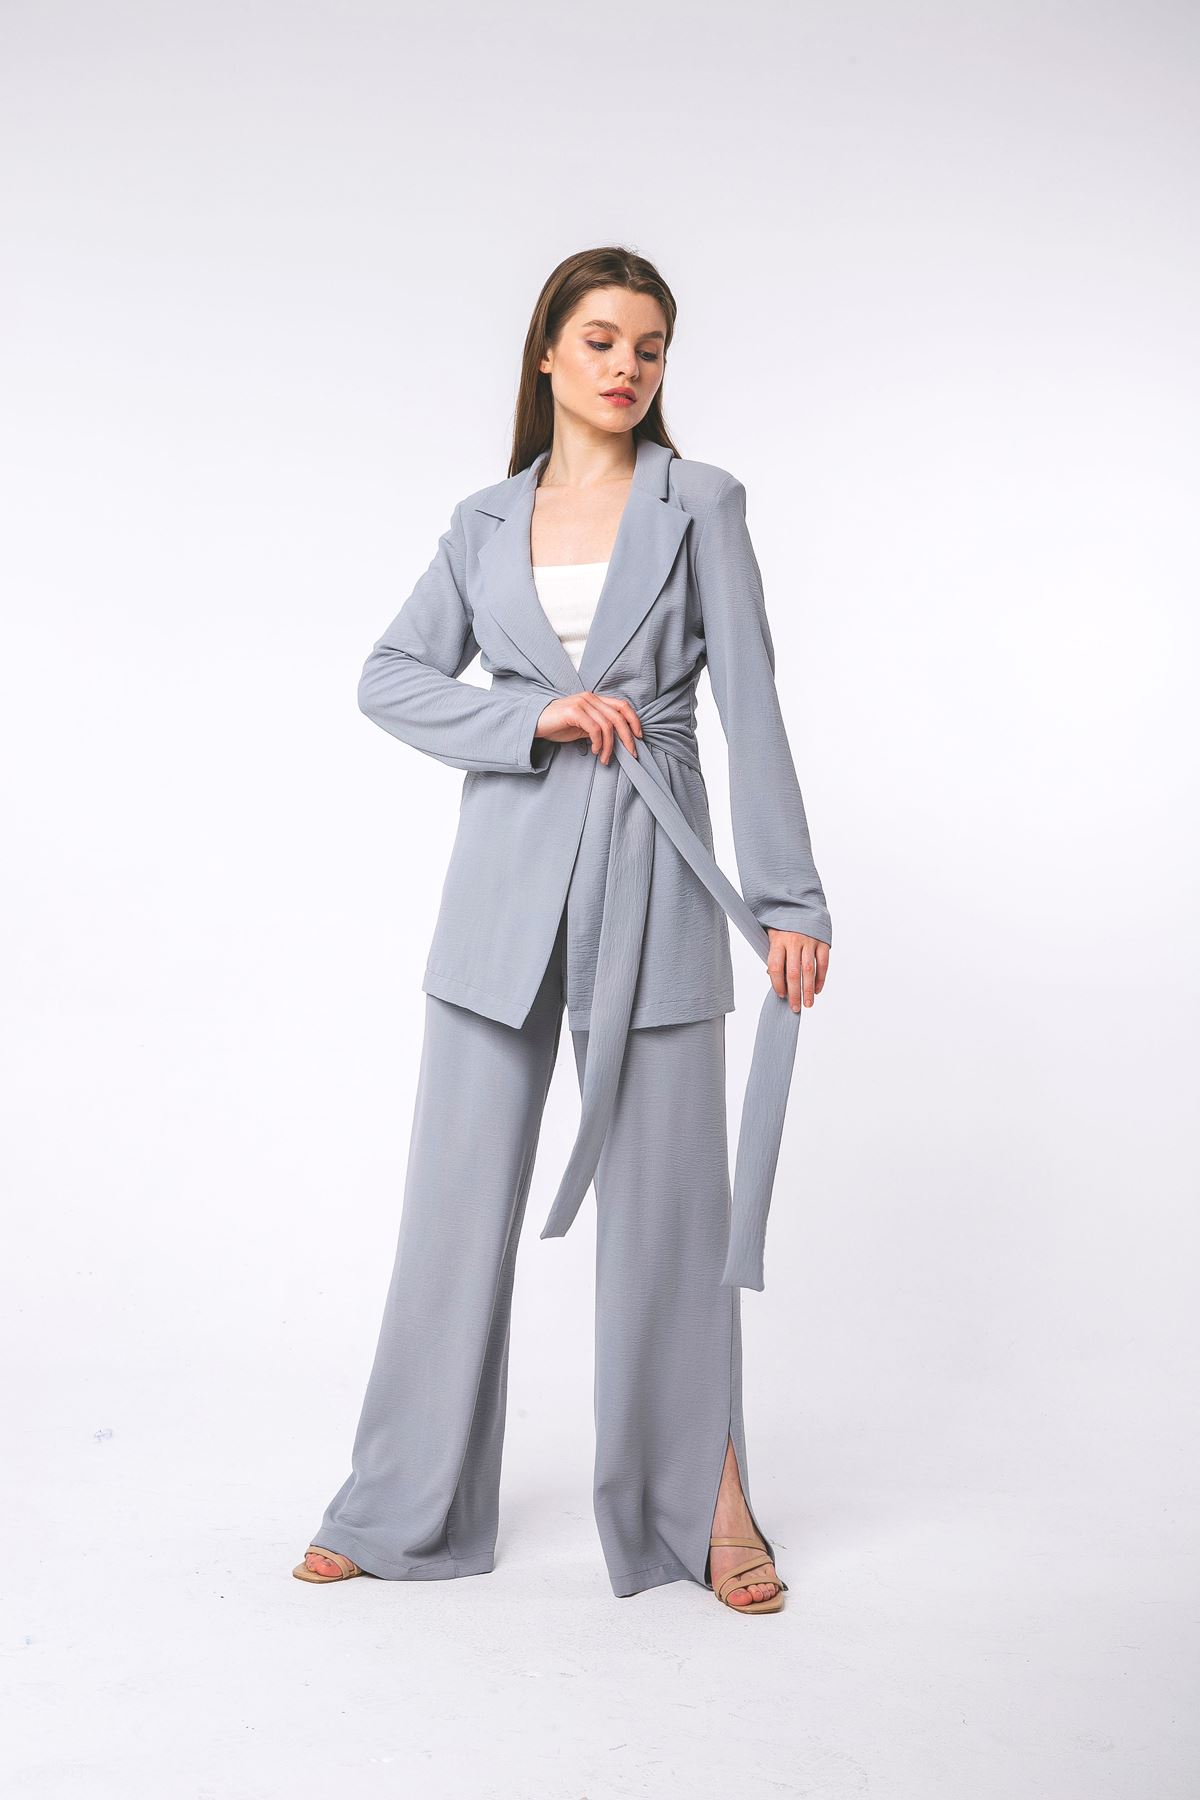 Aerobin Fabric Long Sleeve Below Hip Comfy Tied Front Women Jacket - Grey